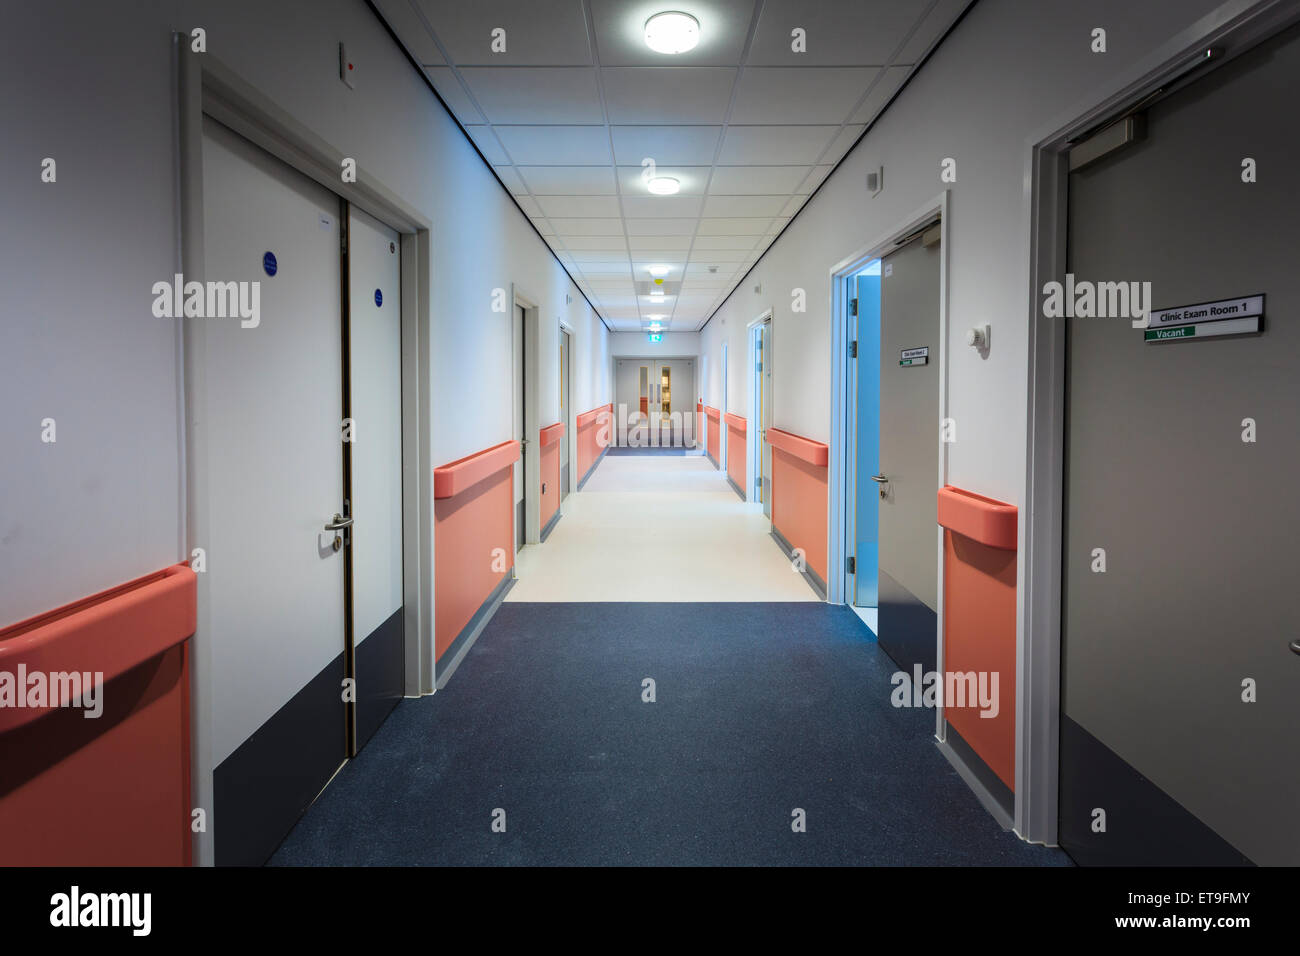 Hospital corridor passageway without people Stock Photo